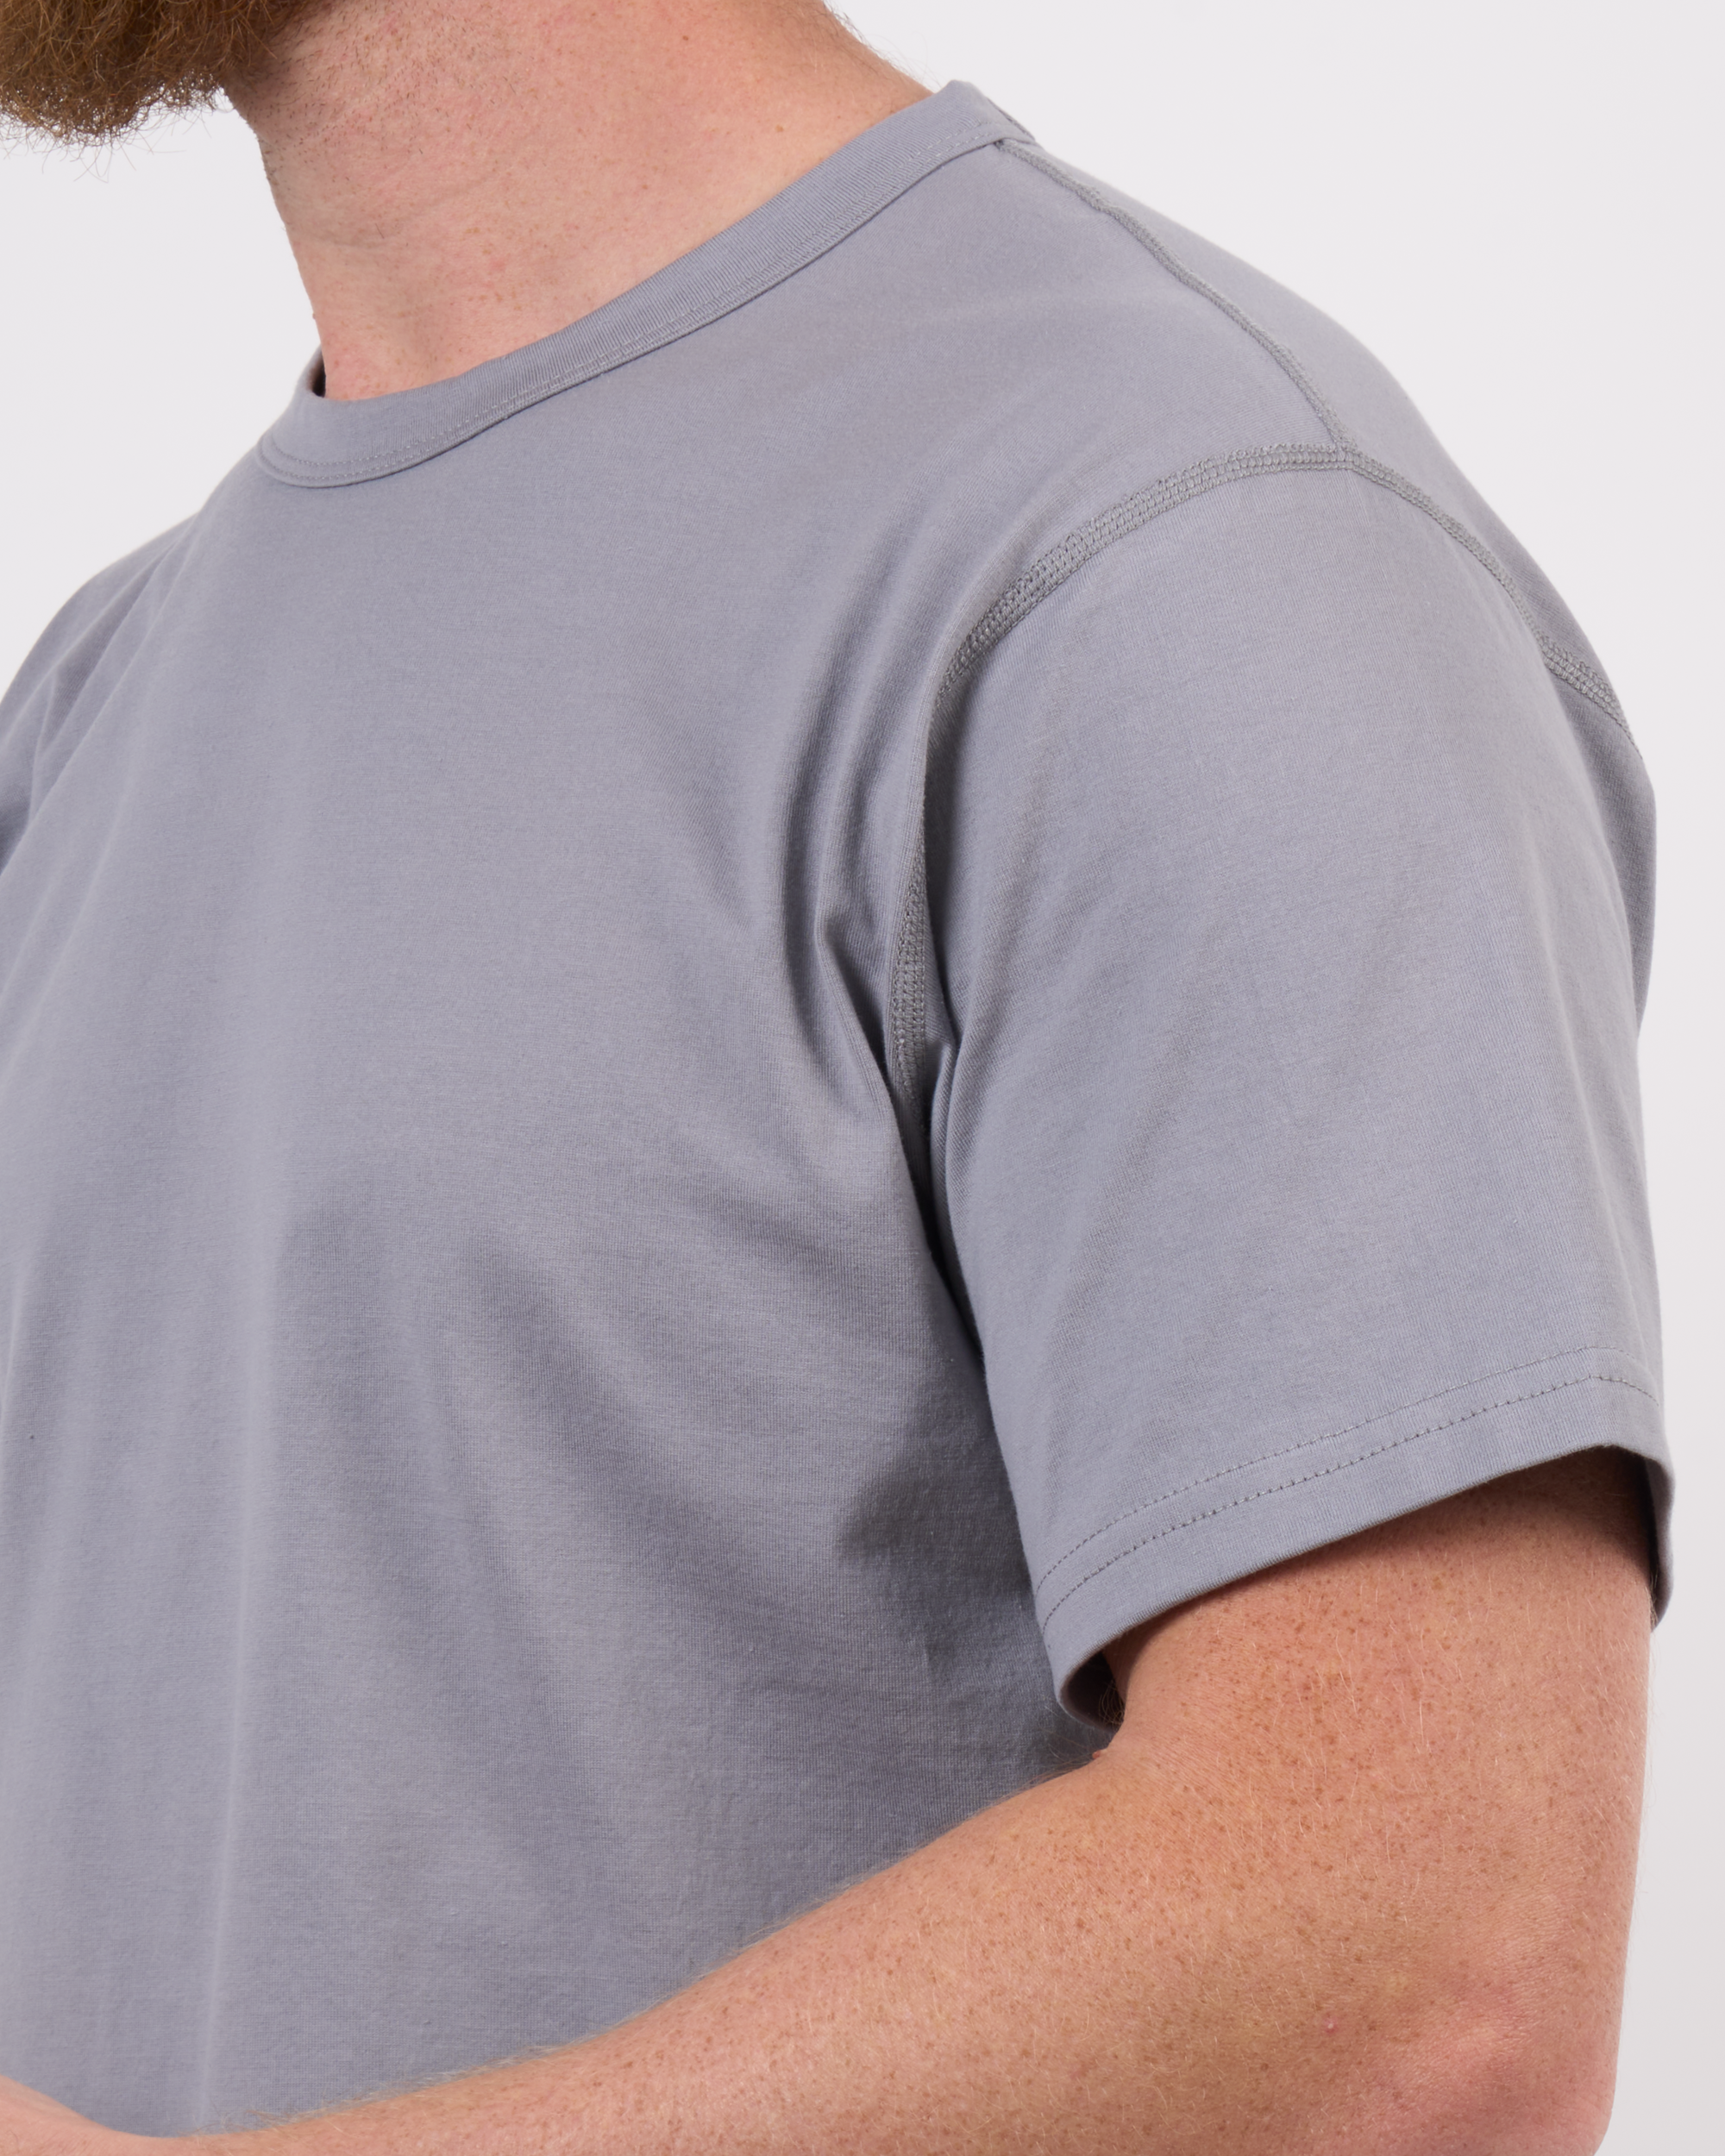 Foreign Rider Co Supima Cotton Grey Short Sleeve T-Shirt Shoulder Flat-lock Stitch Detail